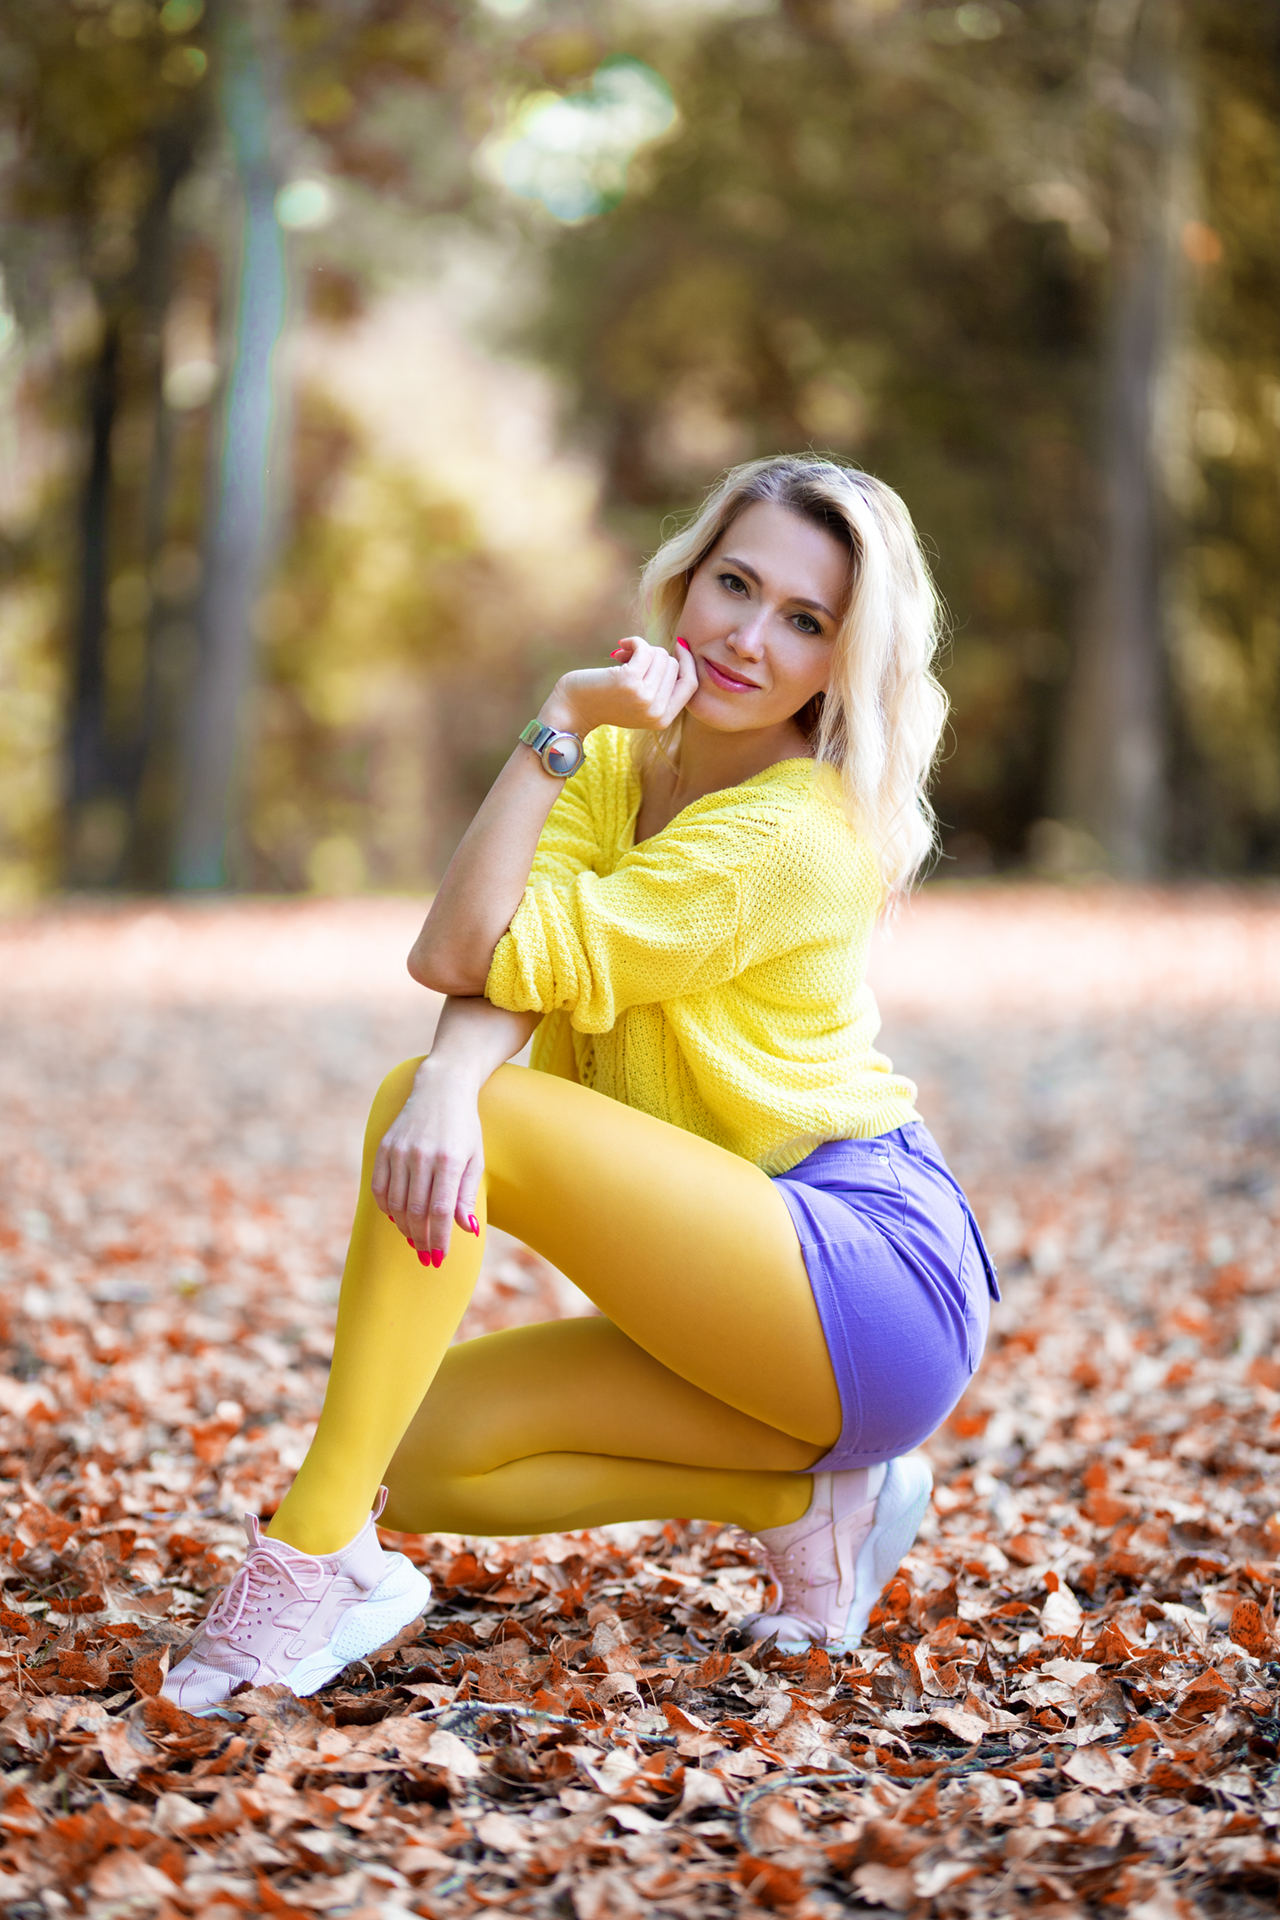 Aleksey Lozgachev Women Blonde Yellow Clothing Shorts Sneakers Fall Fallen Leaves Outdoors Model Leg 1280x1920